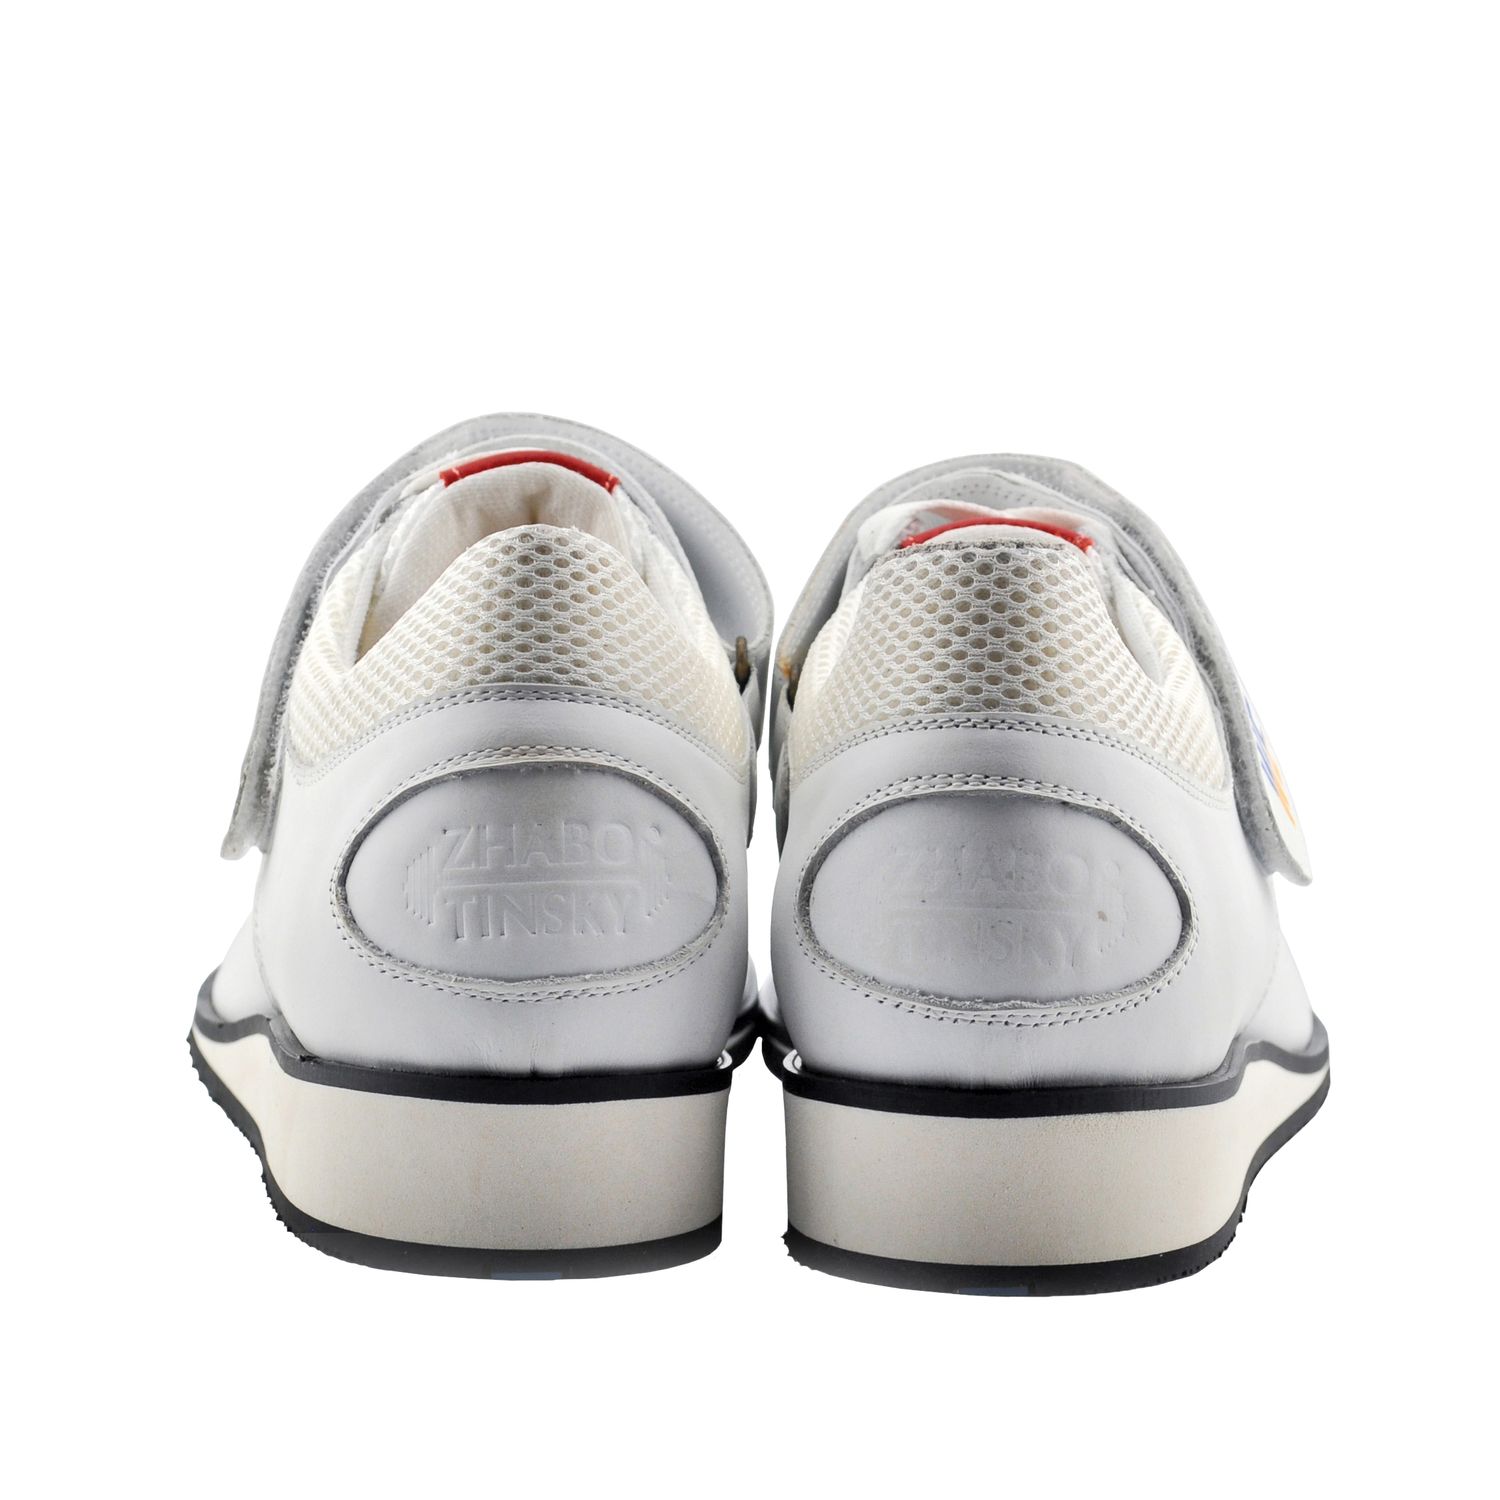 Anatomic Sneakers Zhabotinsky, white, size 42 (UKR)